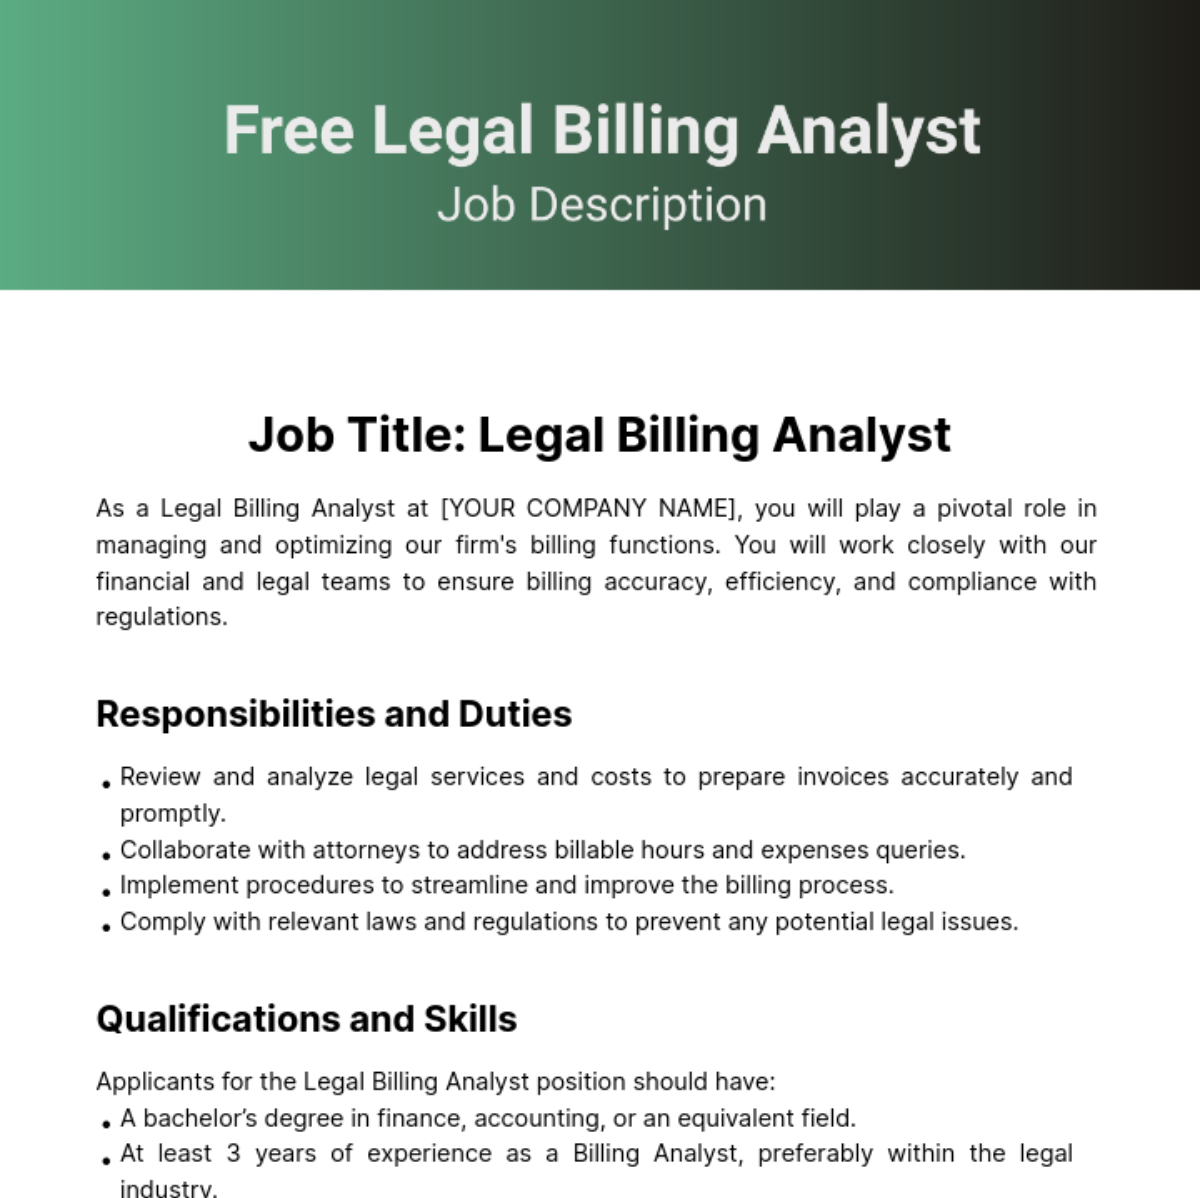 Legal Billing Analyst Job Description Template